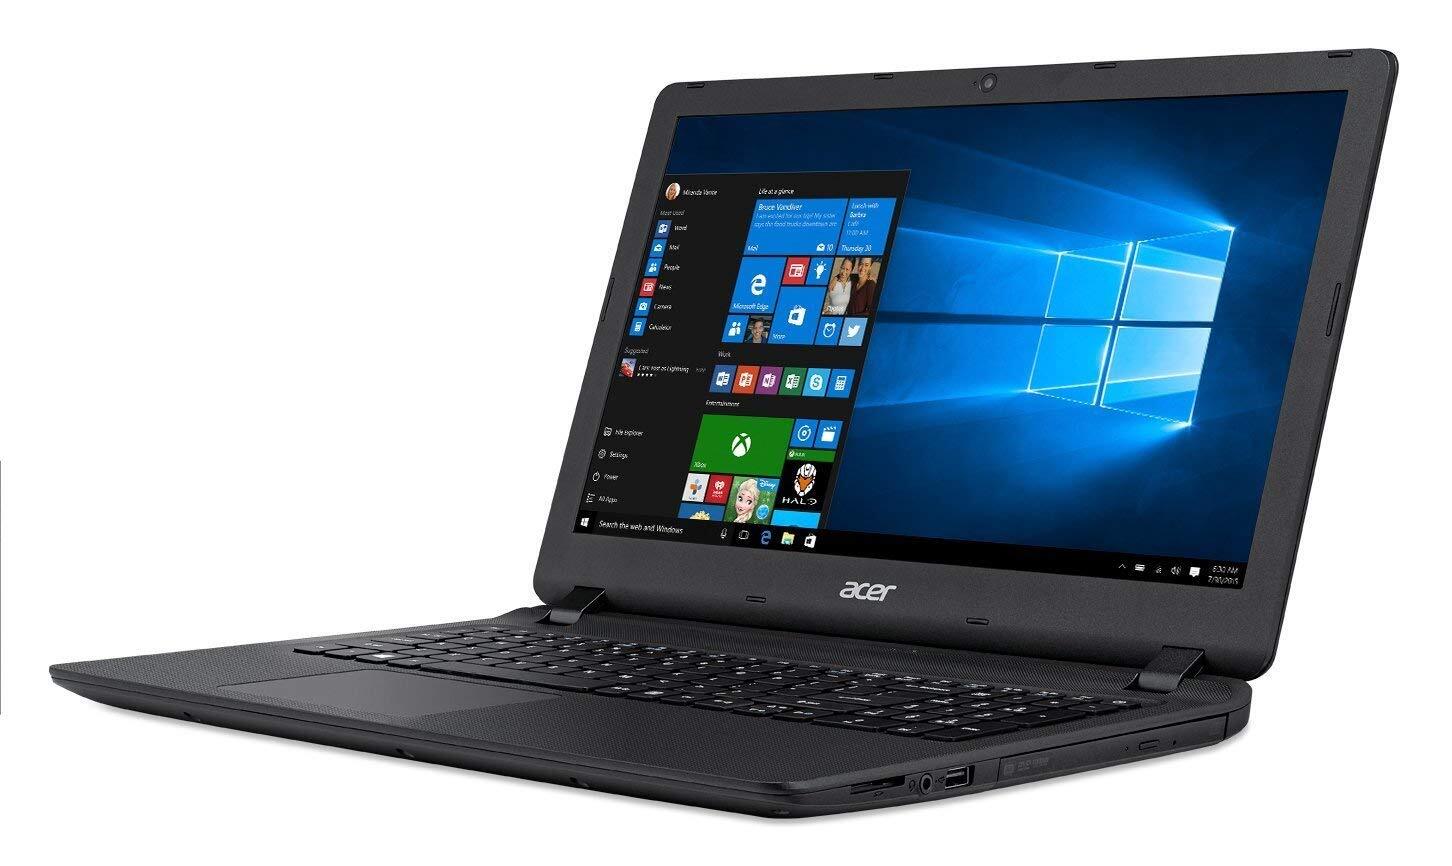 Acer One 14 Z2-485 14-inch Laptop (Intel Pentium Gold Processor) 4415U/4GB/1TB HDD/Windows 10 Home Single Language 64 Bit with Intel HD 610 Graphics 3 Years Warranty Black-M000000000485 www.mysocially.com